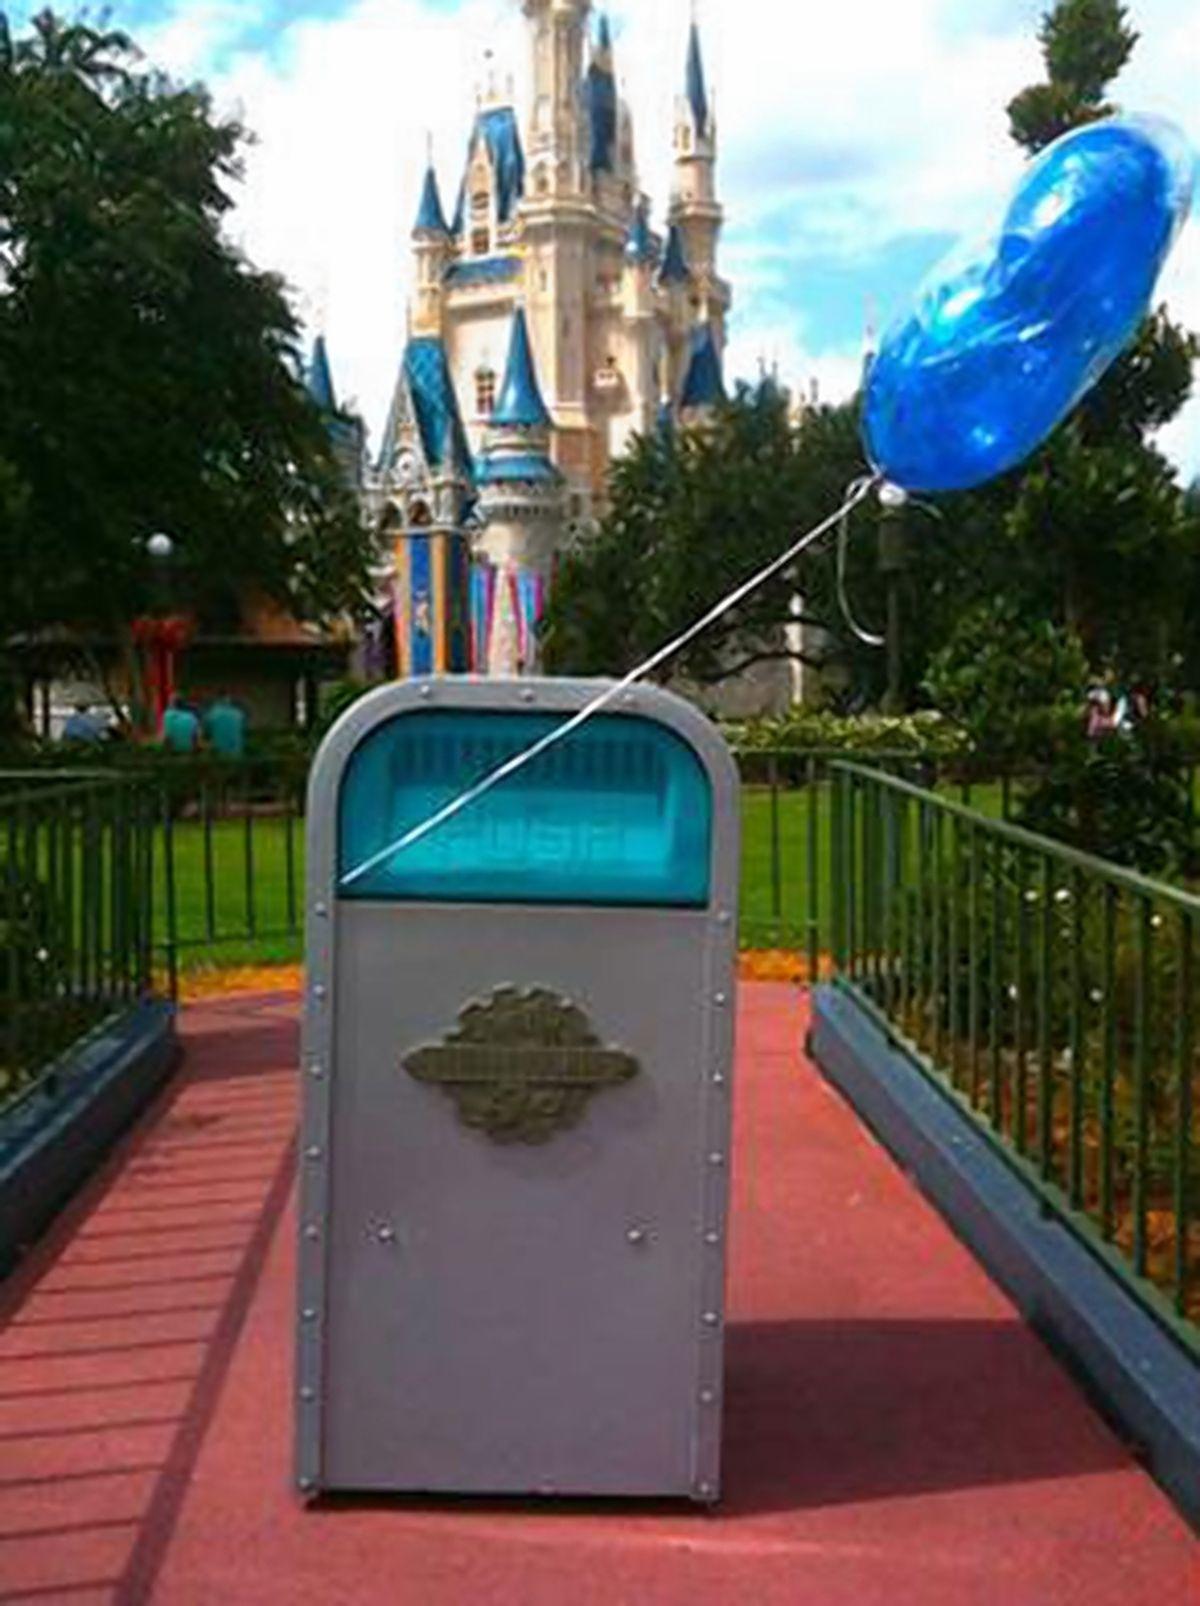 Trash cans of Disney